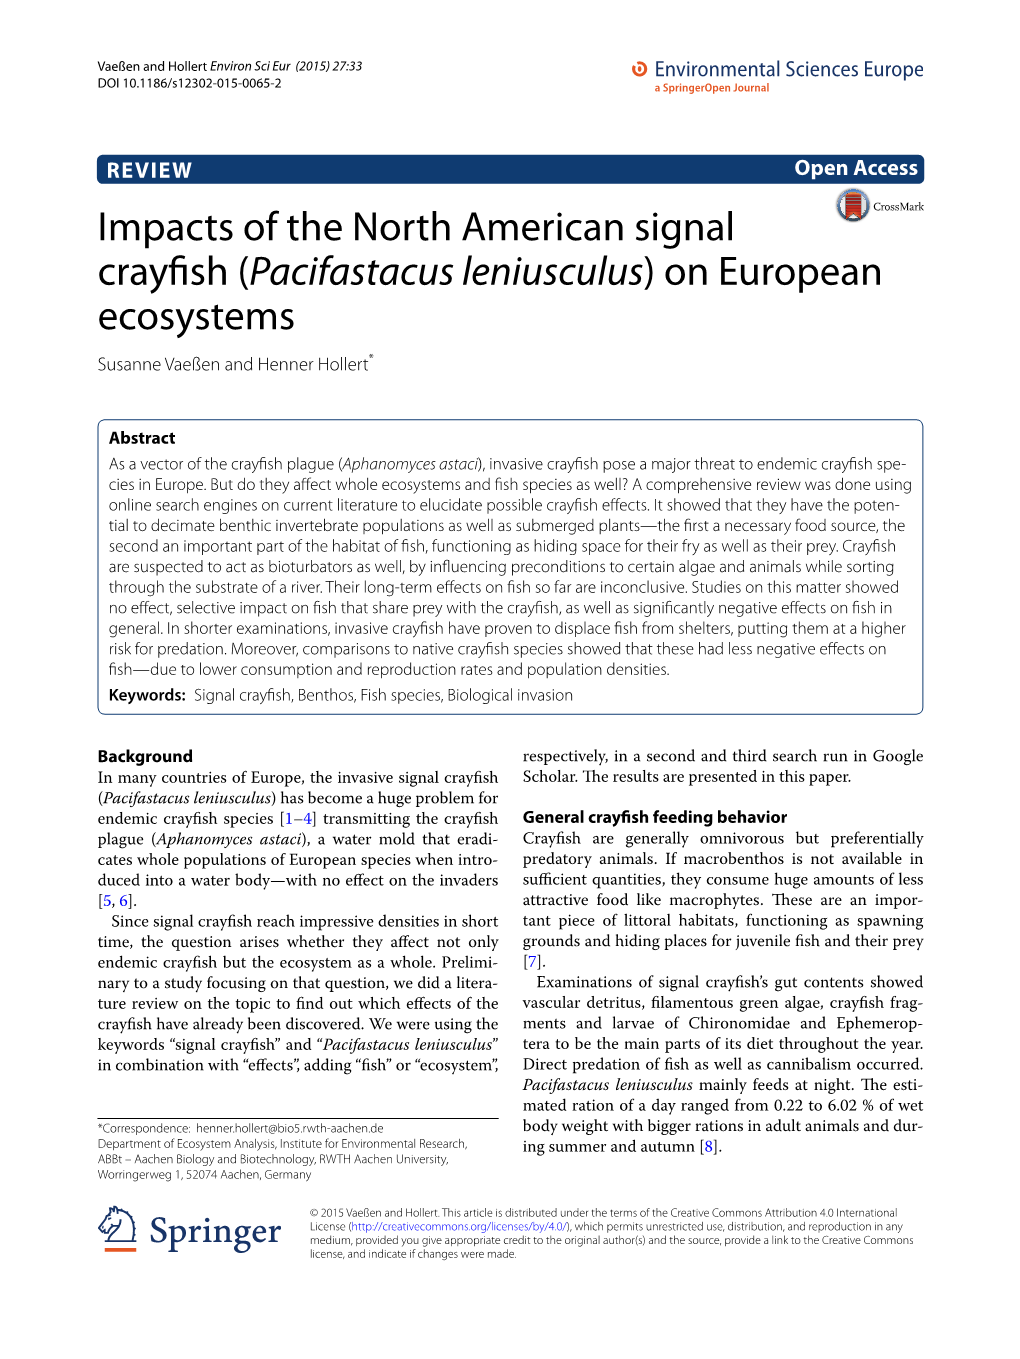 Impacts of the North American Signal Crayfish (Pacifastacus Leniusculus